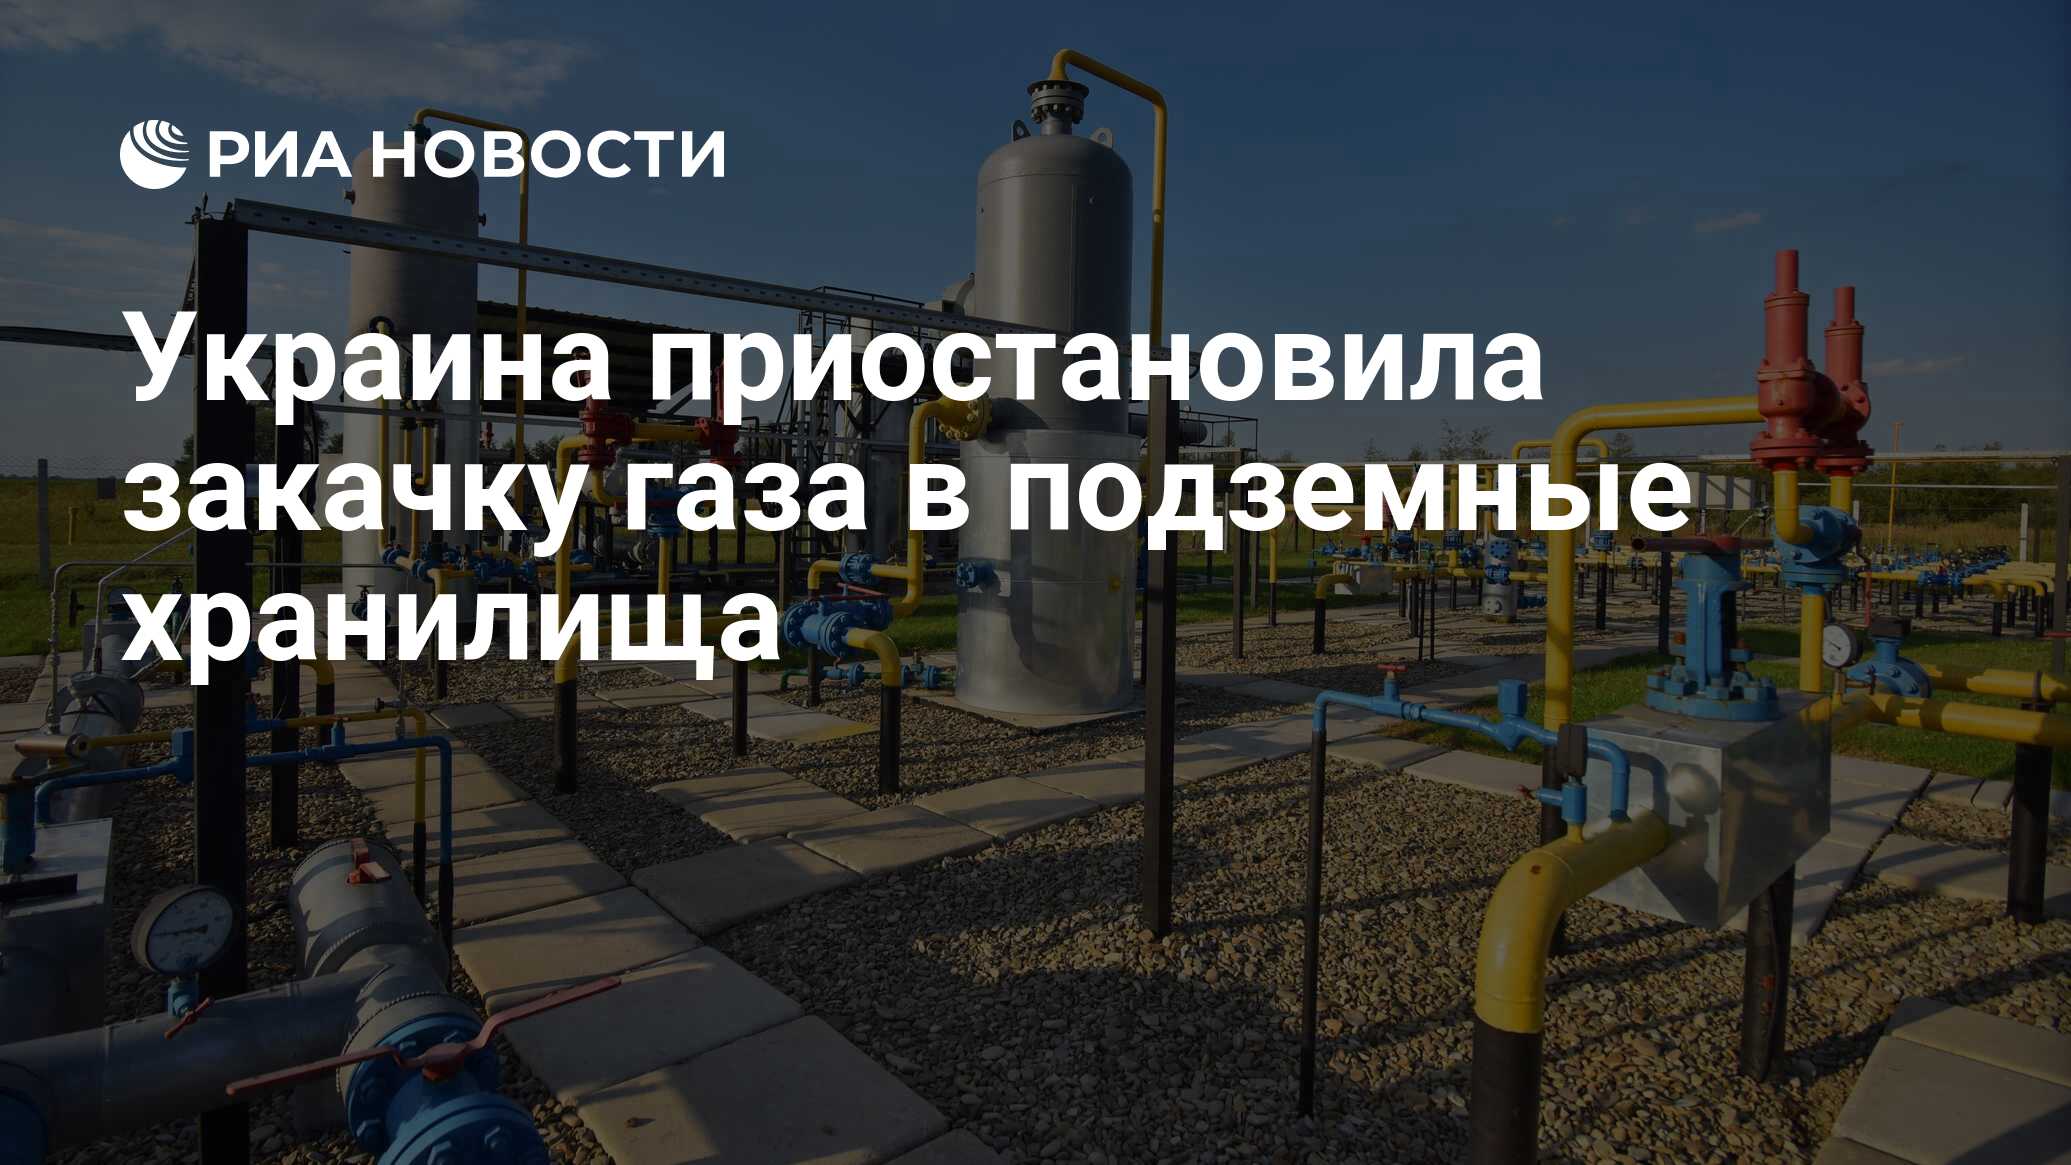 Ukraine has suspended gas injection into underground storage thumbnail